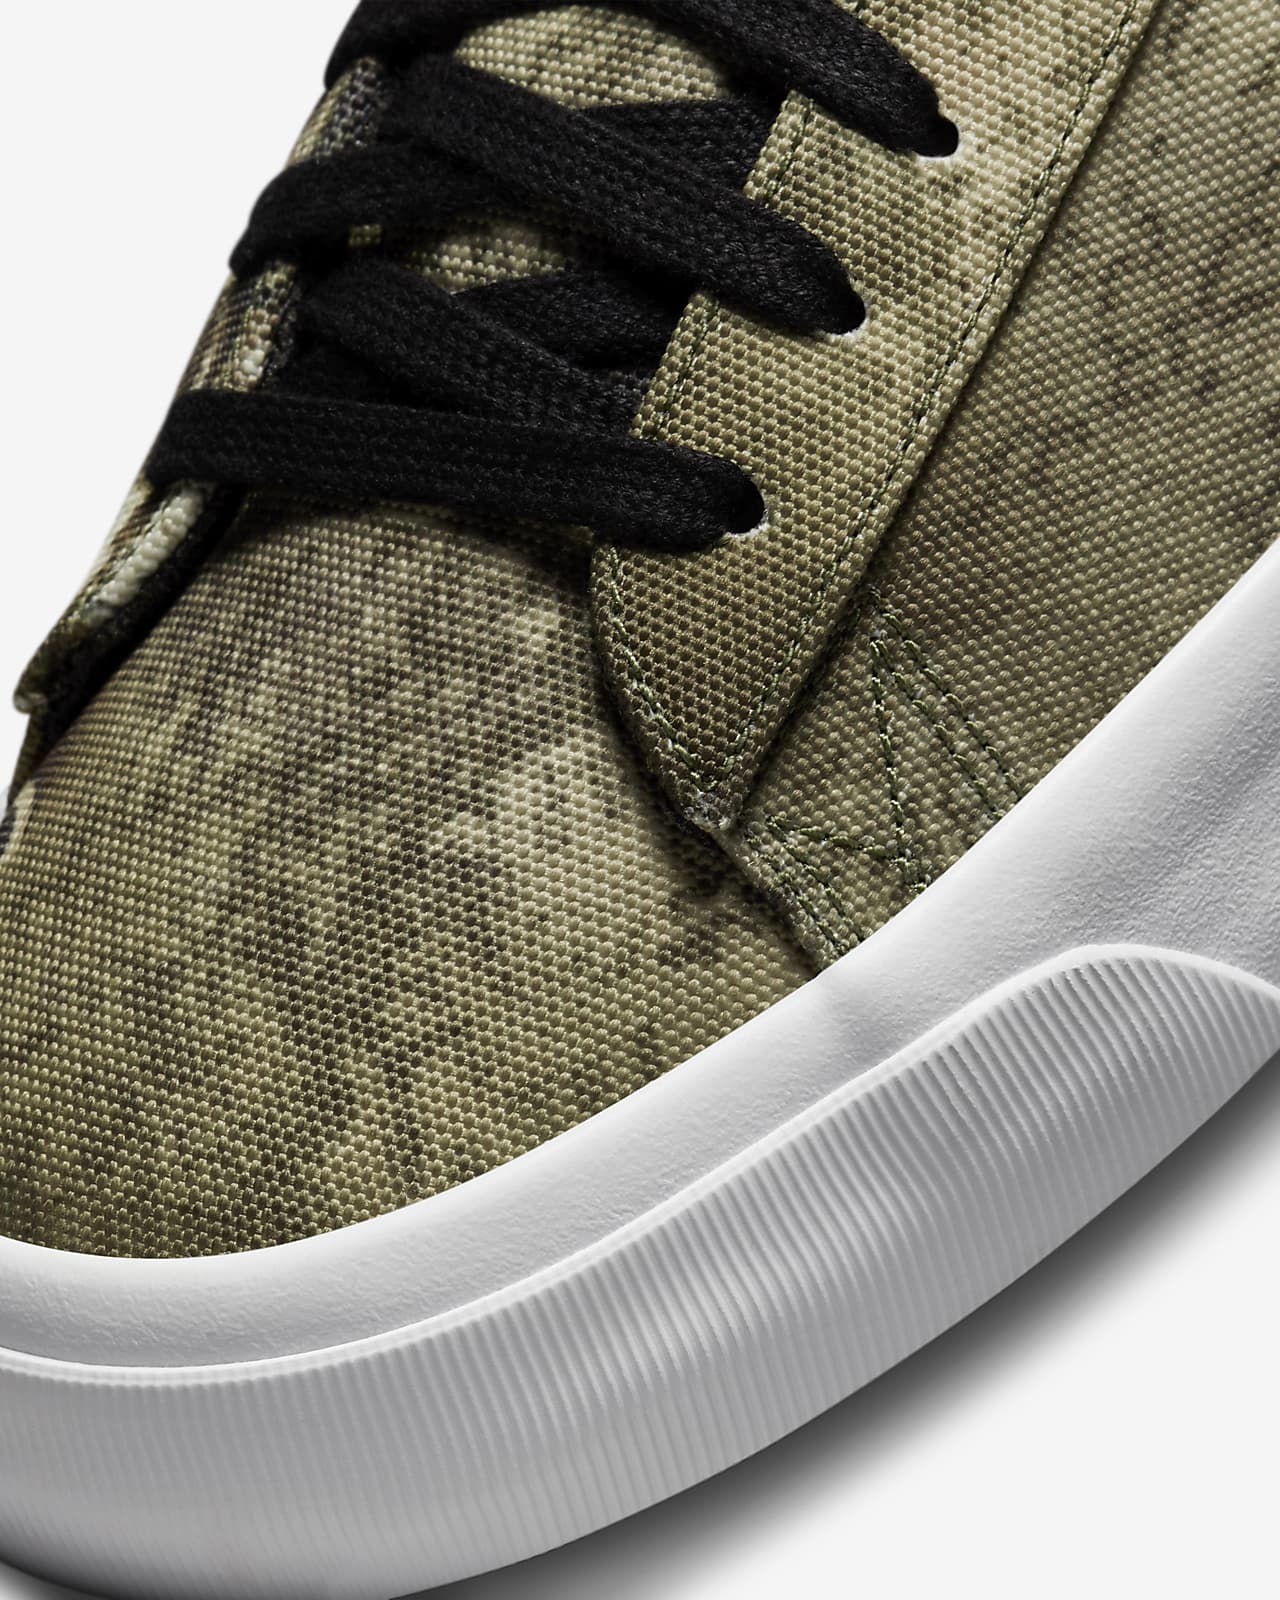 Blazer Low Pro Zapatillas de skateboard. Nike ES